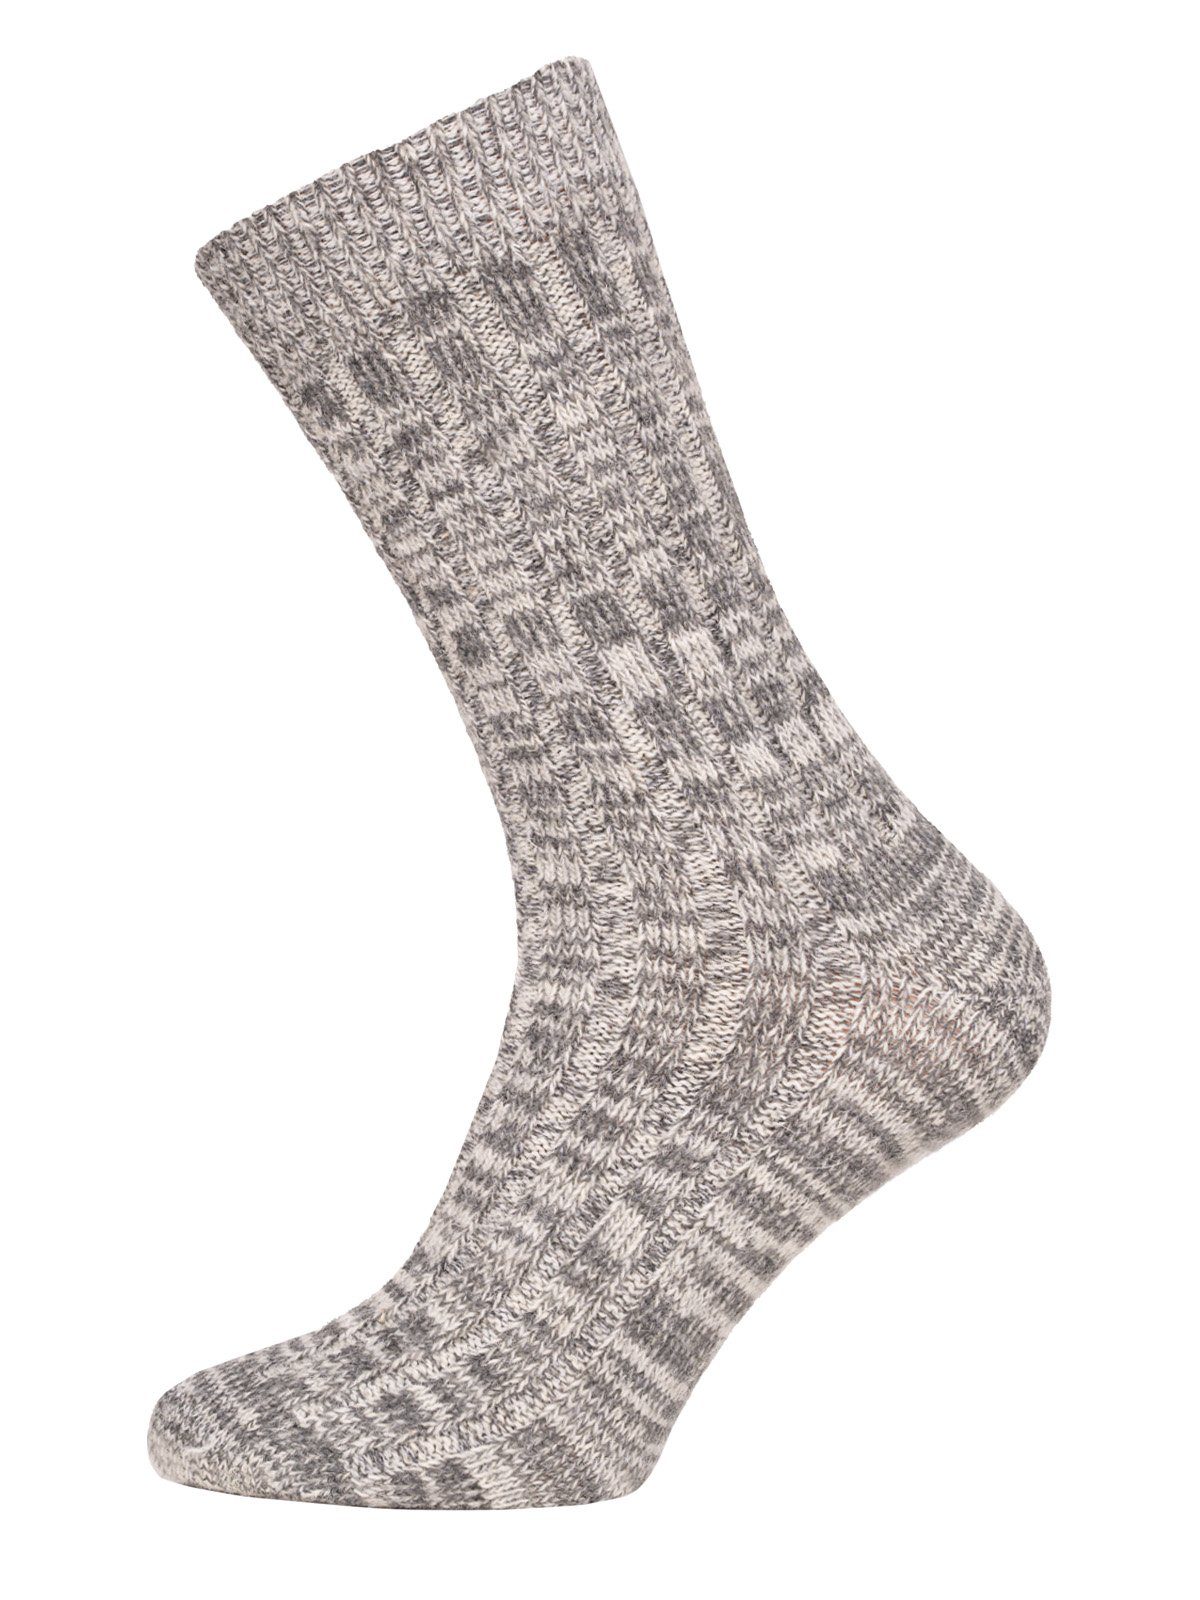 HomeOfSocks Socken Melierte Wollsocken aus 75% Wolle (Schurwolle) (Paar, 1 Paar) Dünne und warme Wollsocken mit 75% Wollanteil Grau